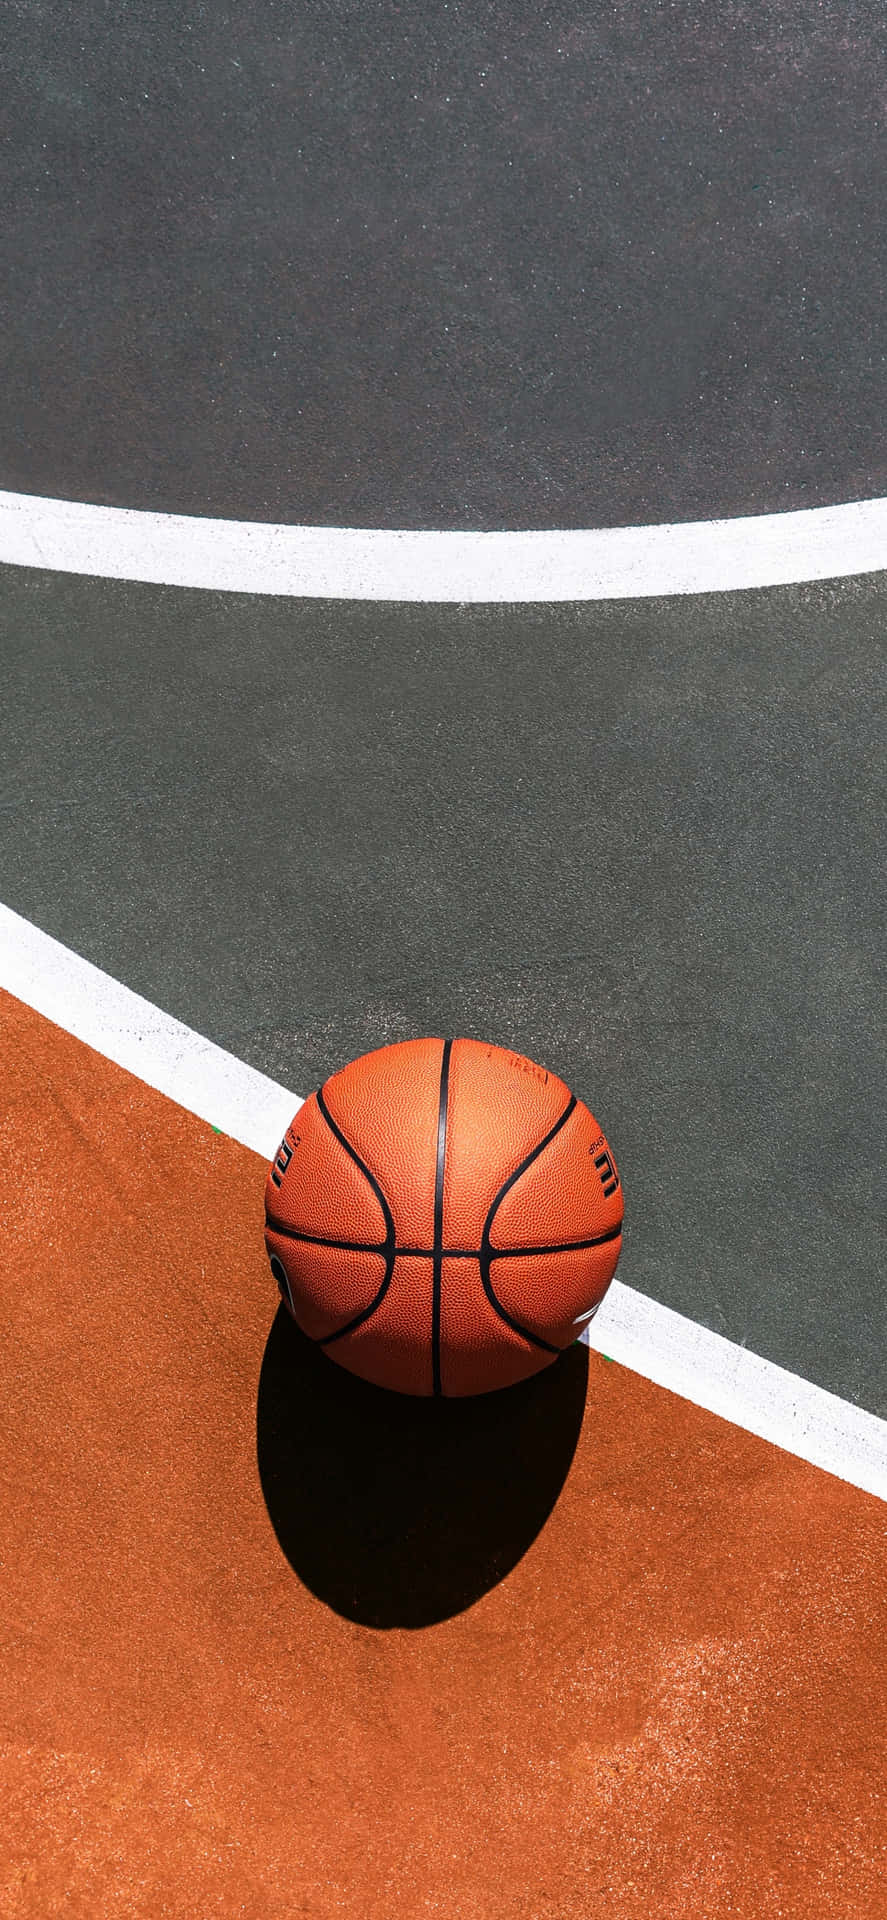 Iphone Xs Basketball NBA Draft Background